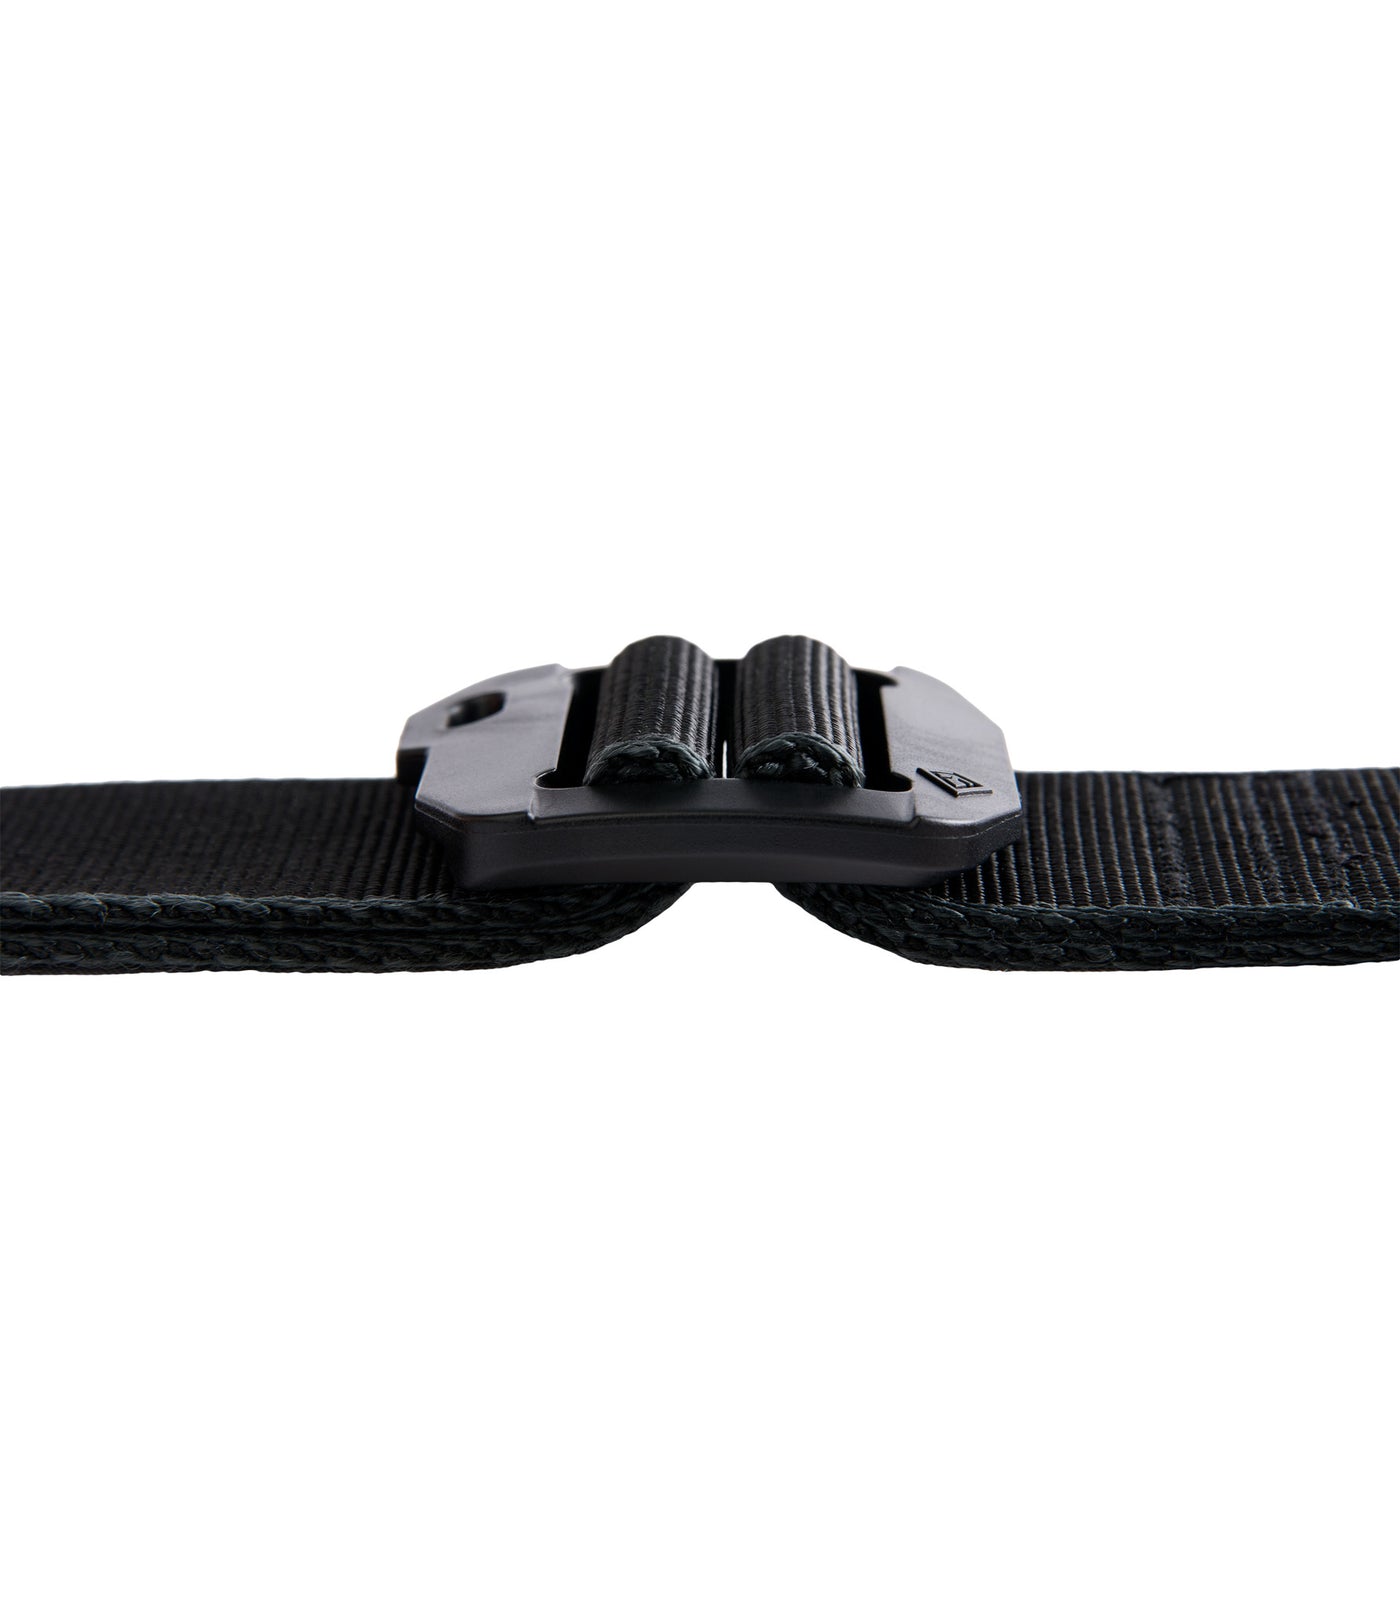 Buckle of Range Belt 1.5” in Black